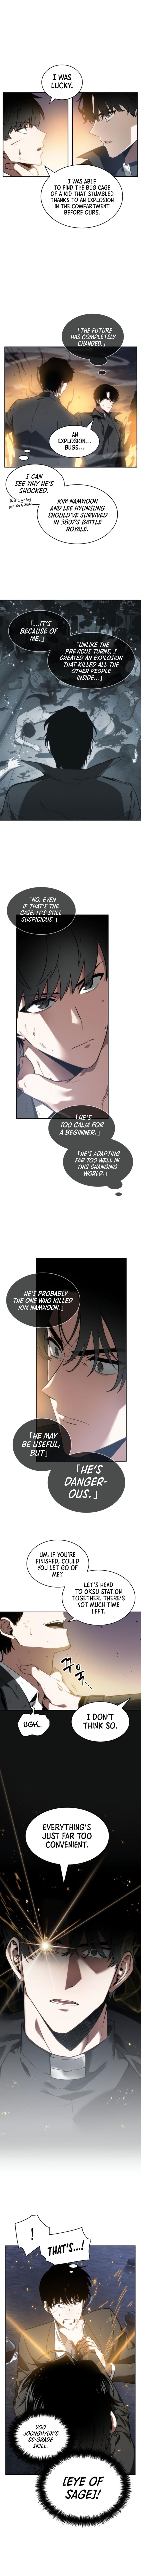 Omniscient Reader's View Manga Manga Chapter - 11 - image 8